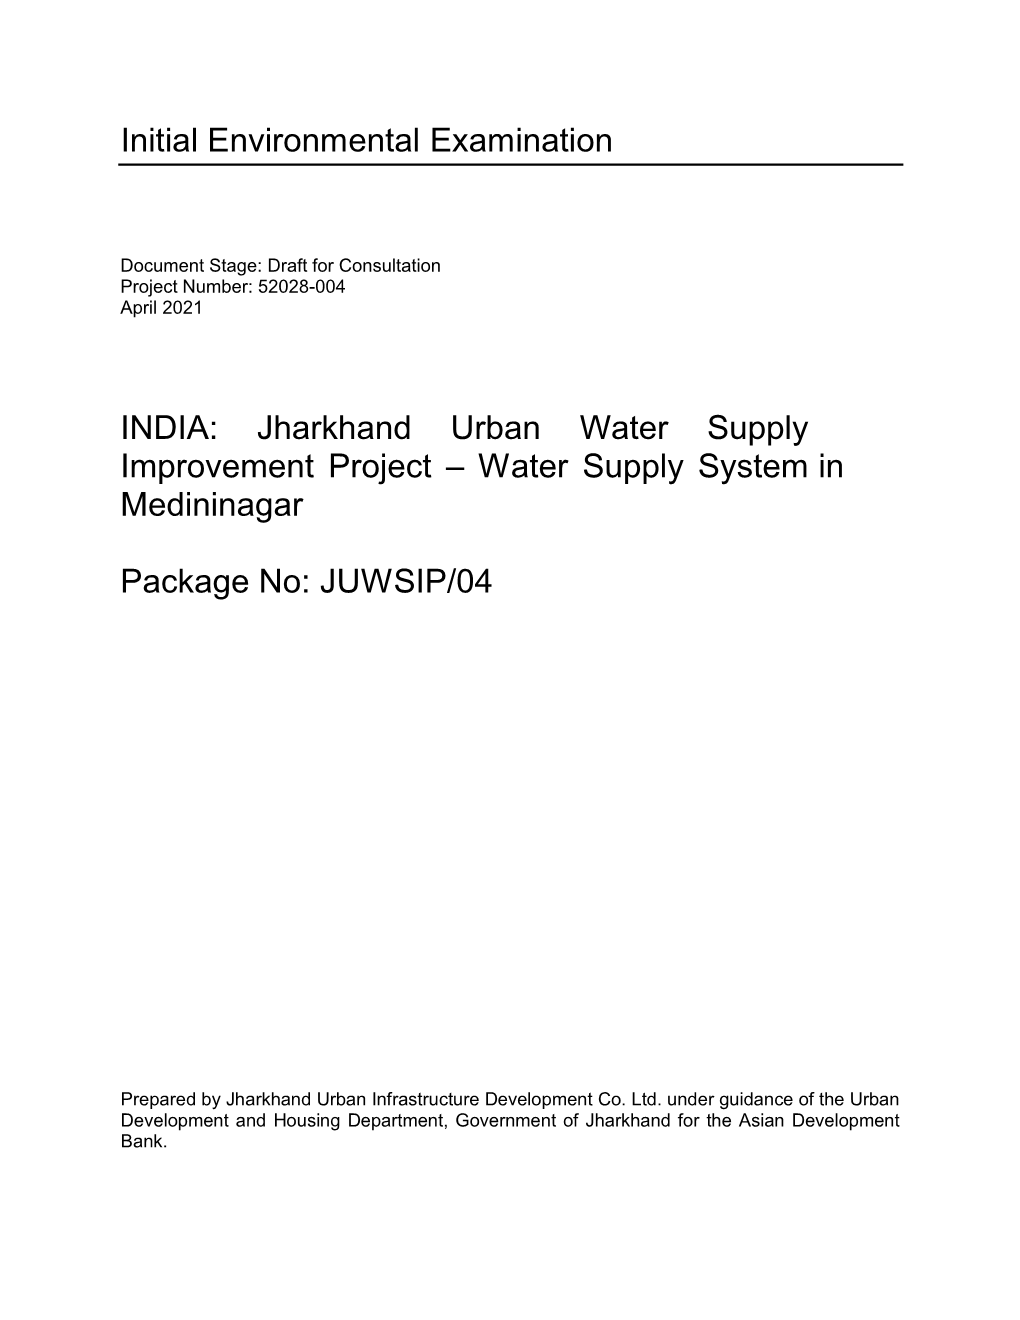 Jharkhand Urban Water Supply Improvement Project – Water Supply System in Medininagar